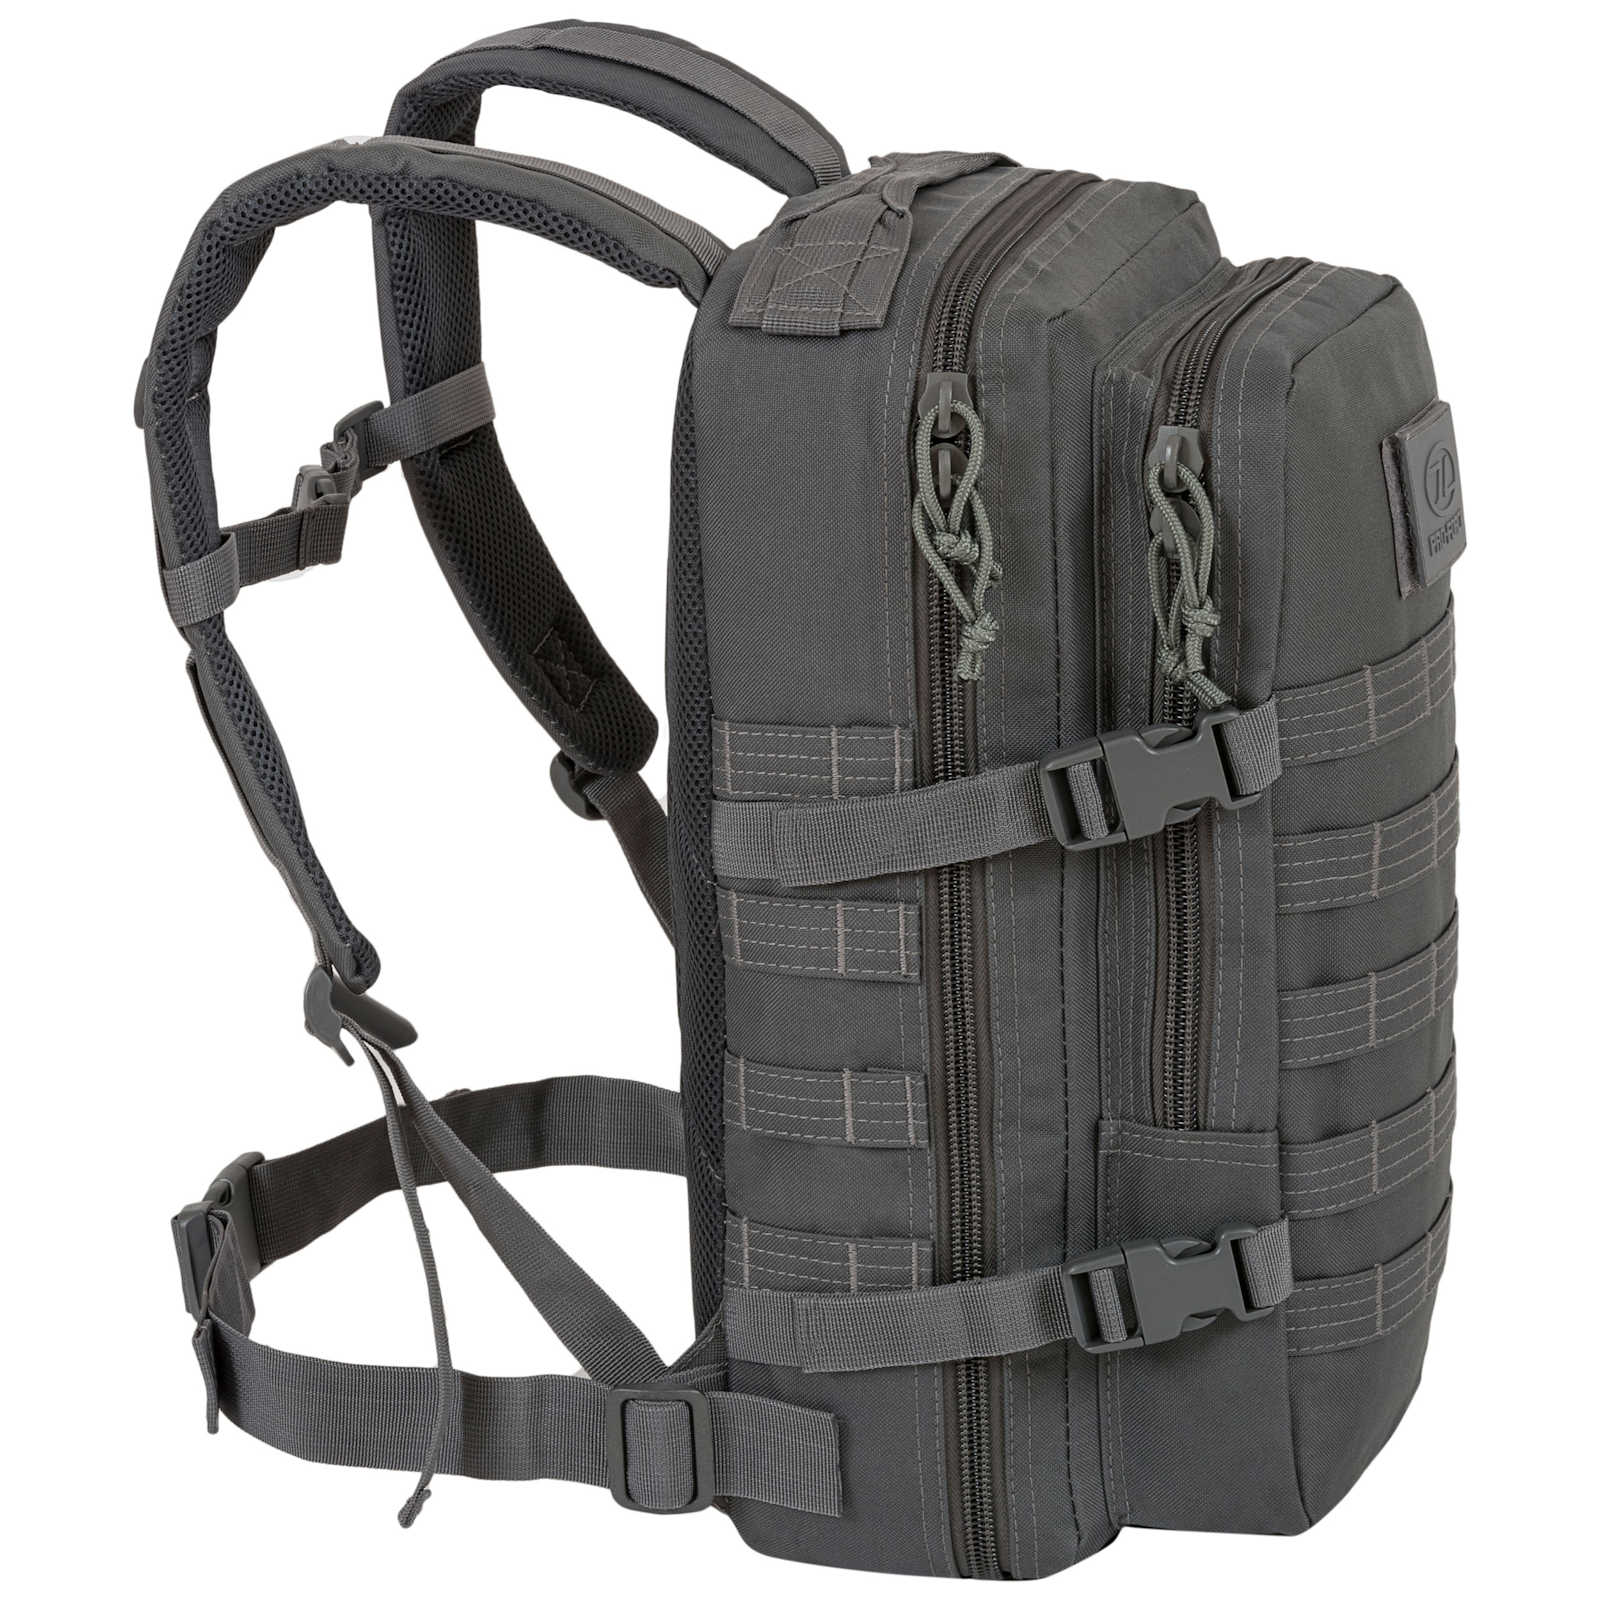 Mode & Accessoires Taschen Schultaschen Schulrucksäcke Highlander Rucksack Backpack TT164 RECON 20L 